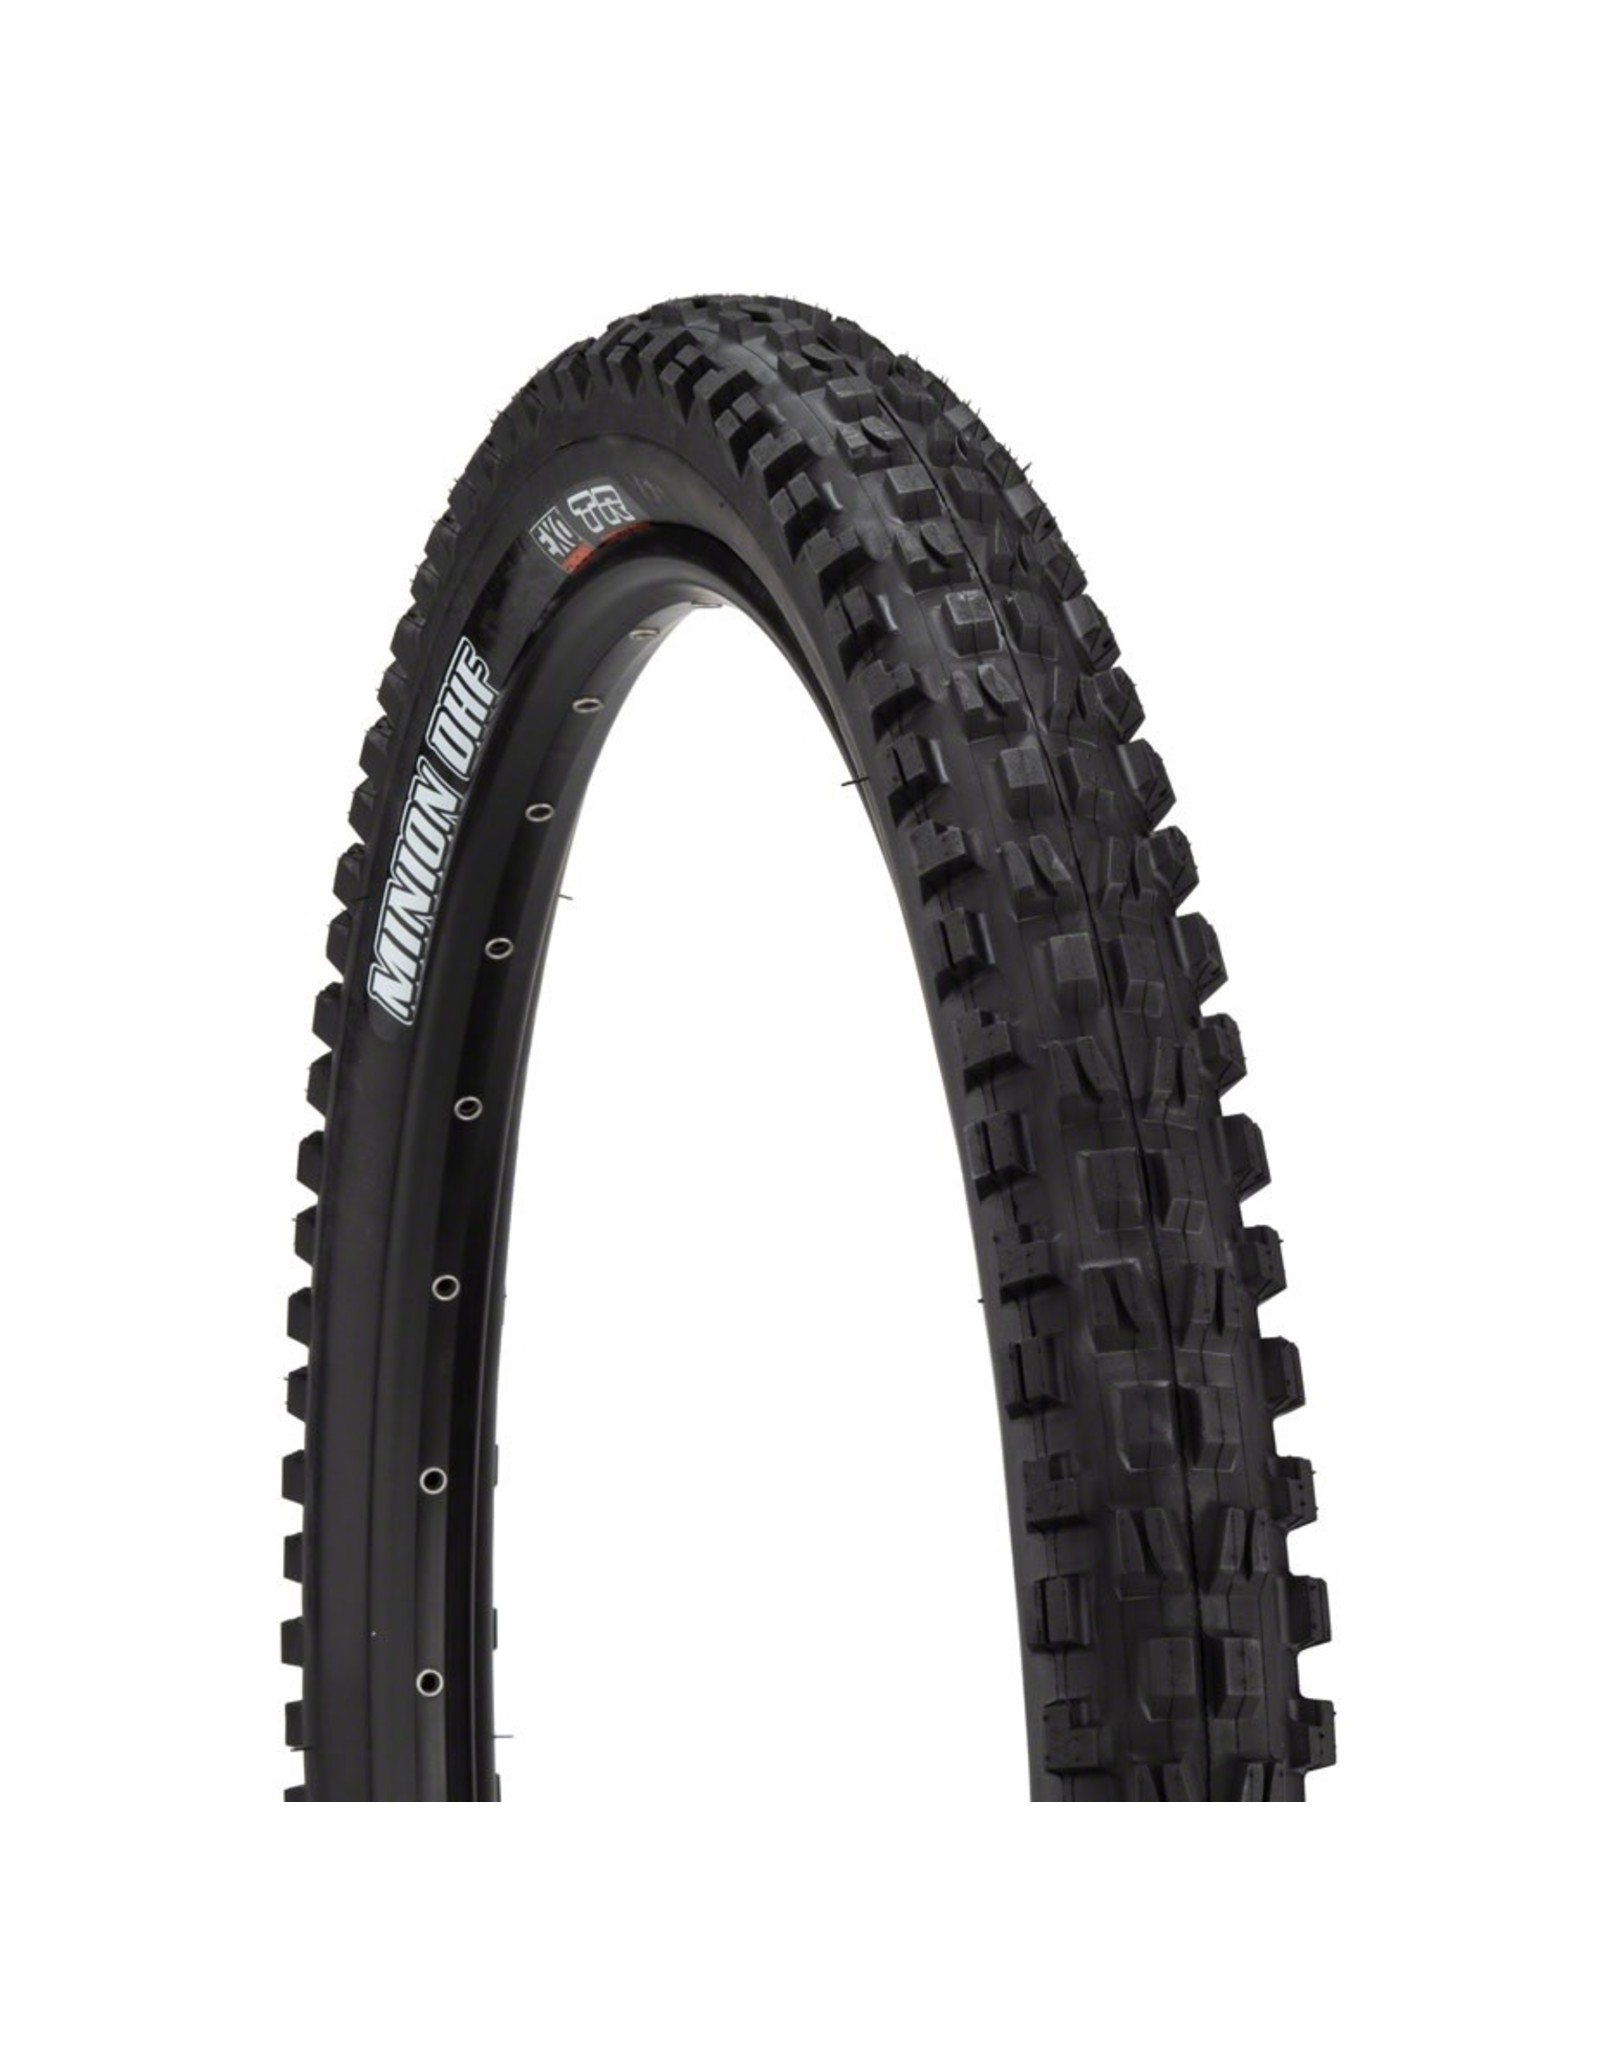 27.5 tubeless tires